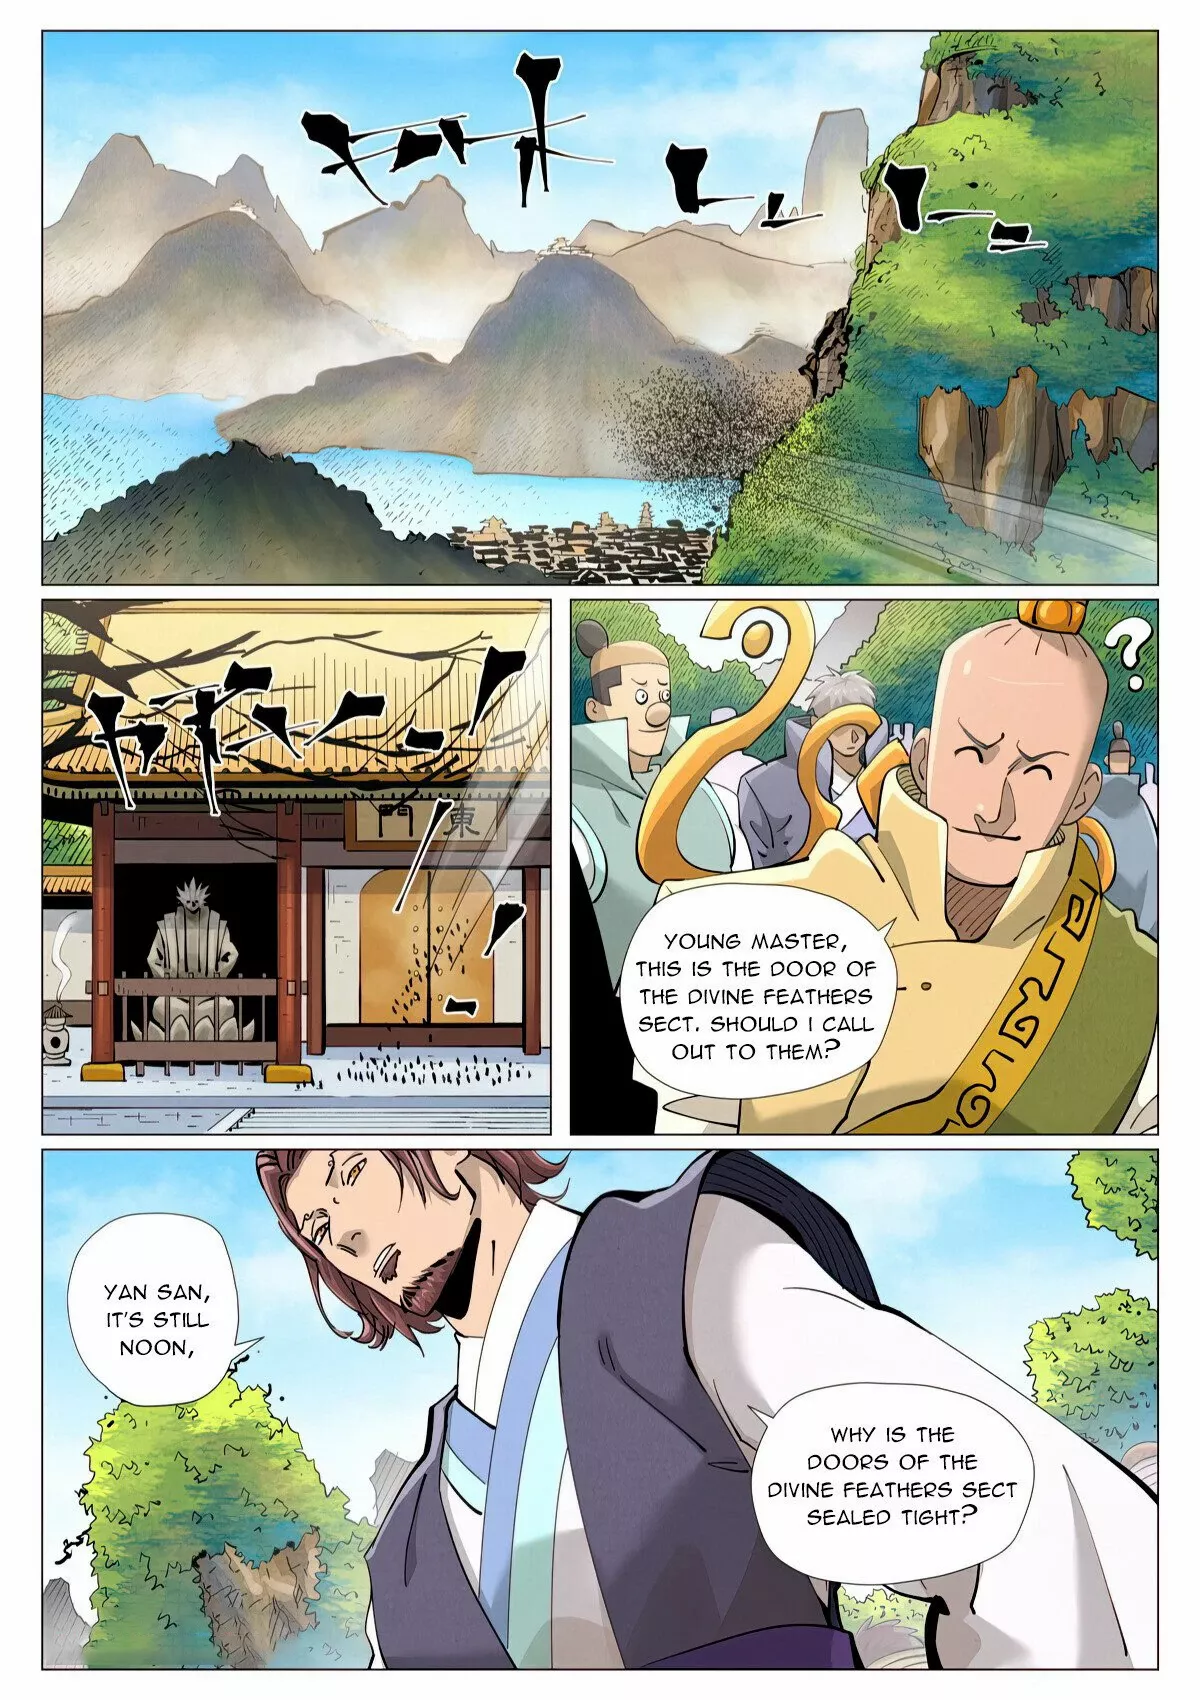 Tales Of Demons And Gods Chapter 429.6 page 4 - Mangakakalot